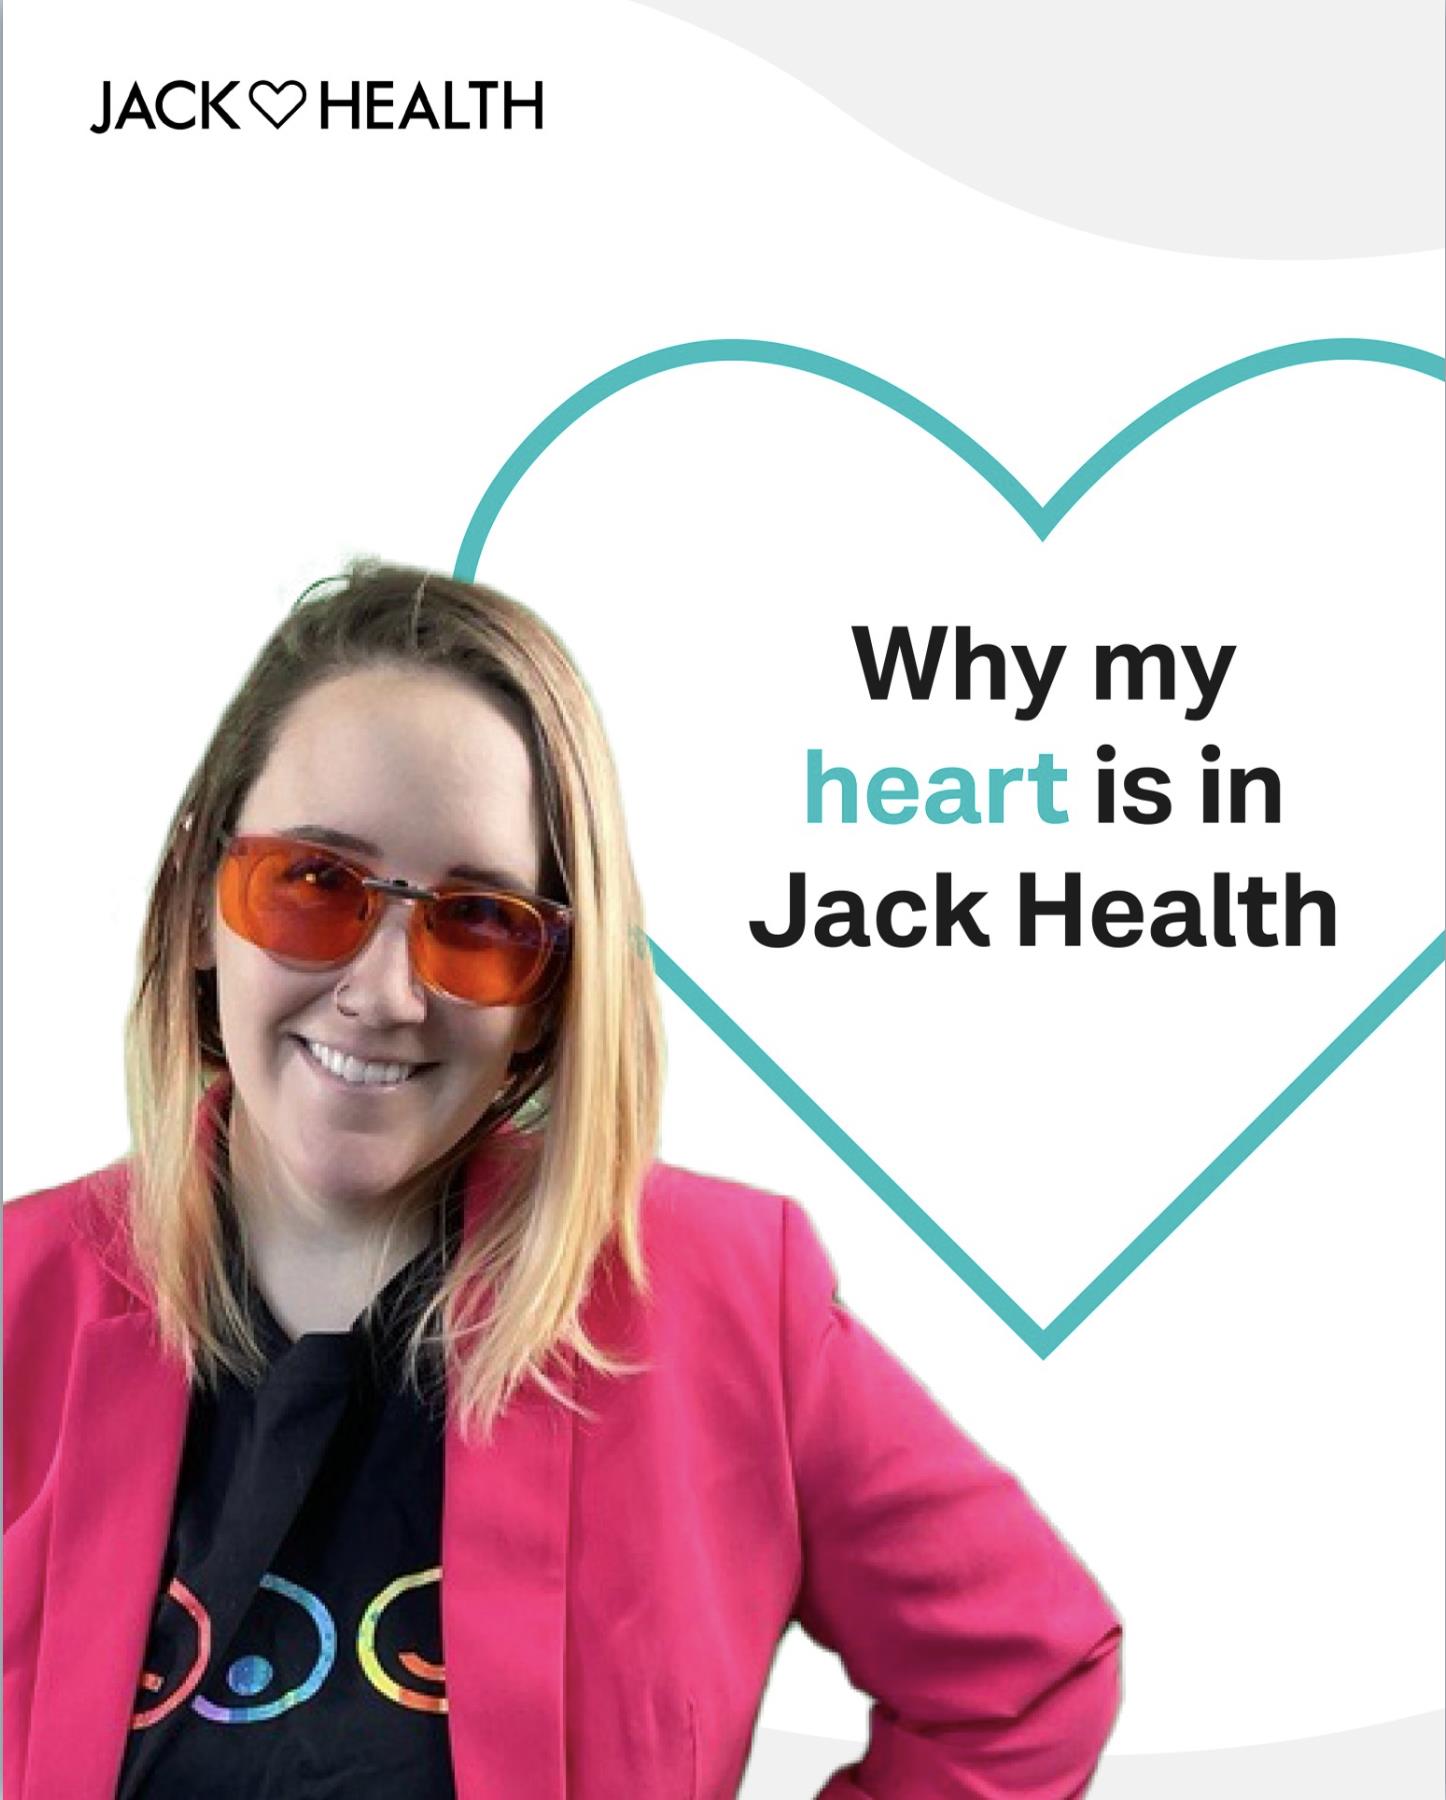 Jack Morton Worldwide on LinkedIn: Why my heart is in Jack Health